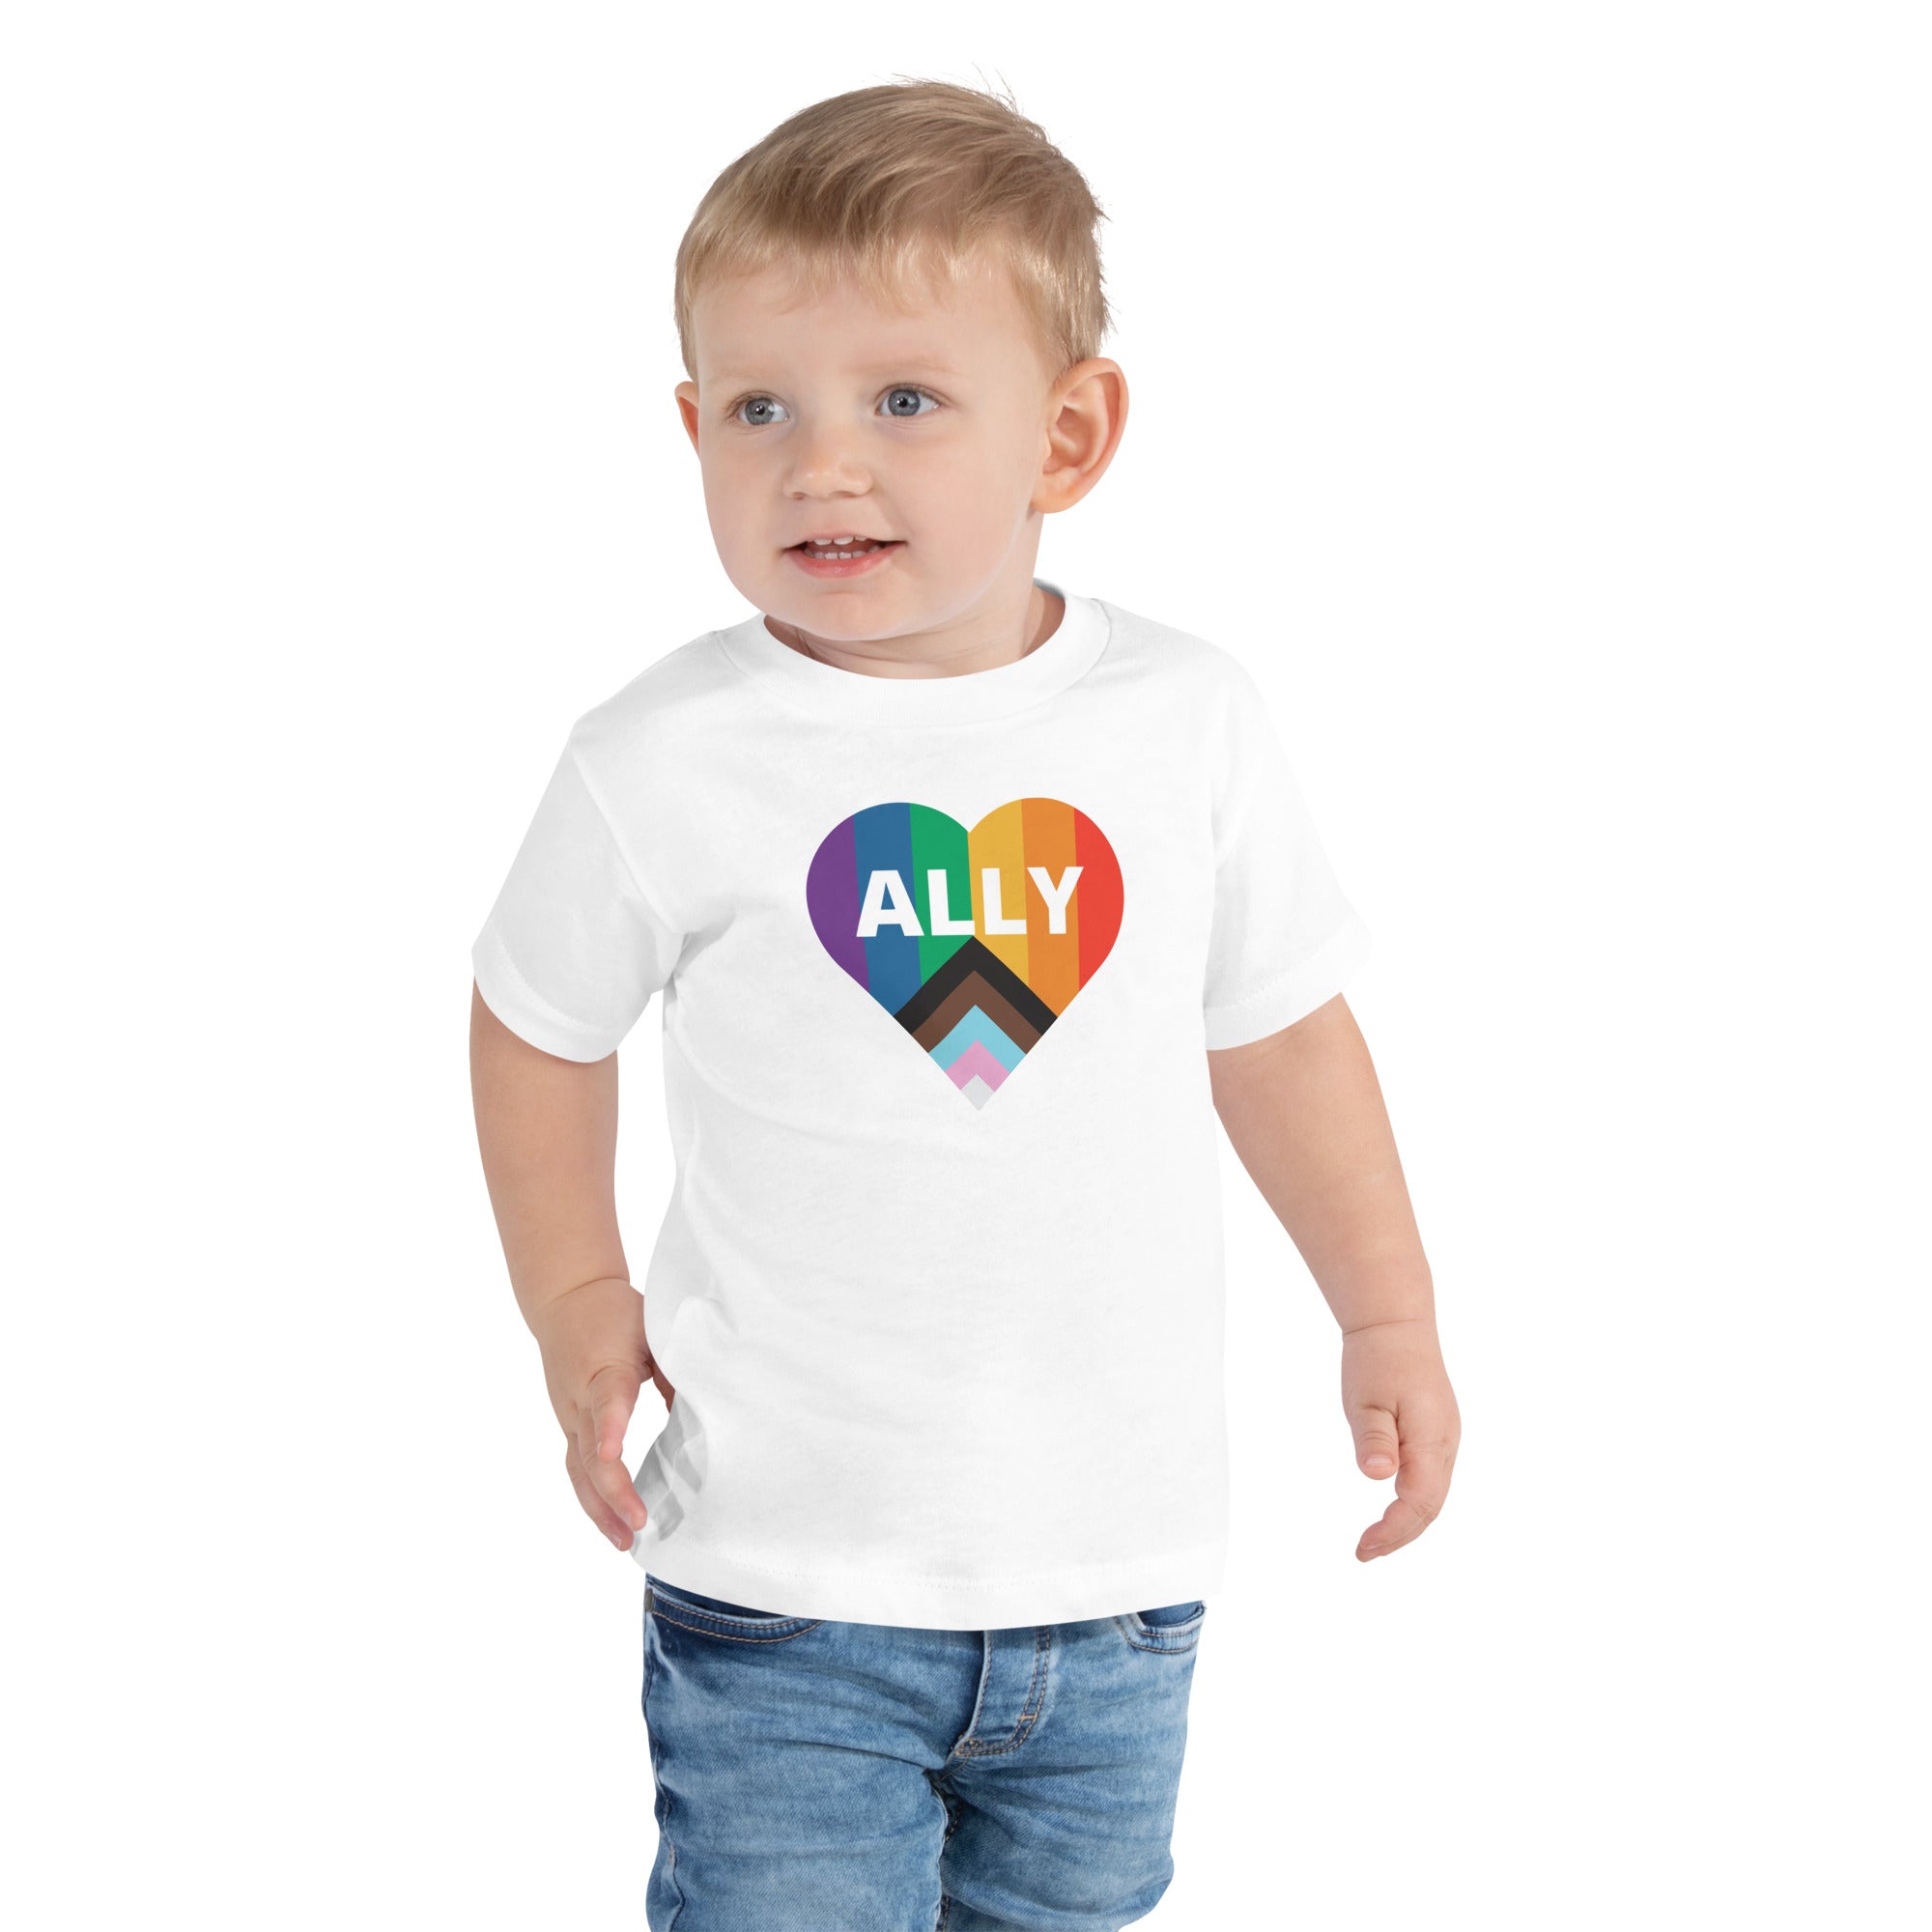 Ally - Toddler Short Sleeve Tee